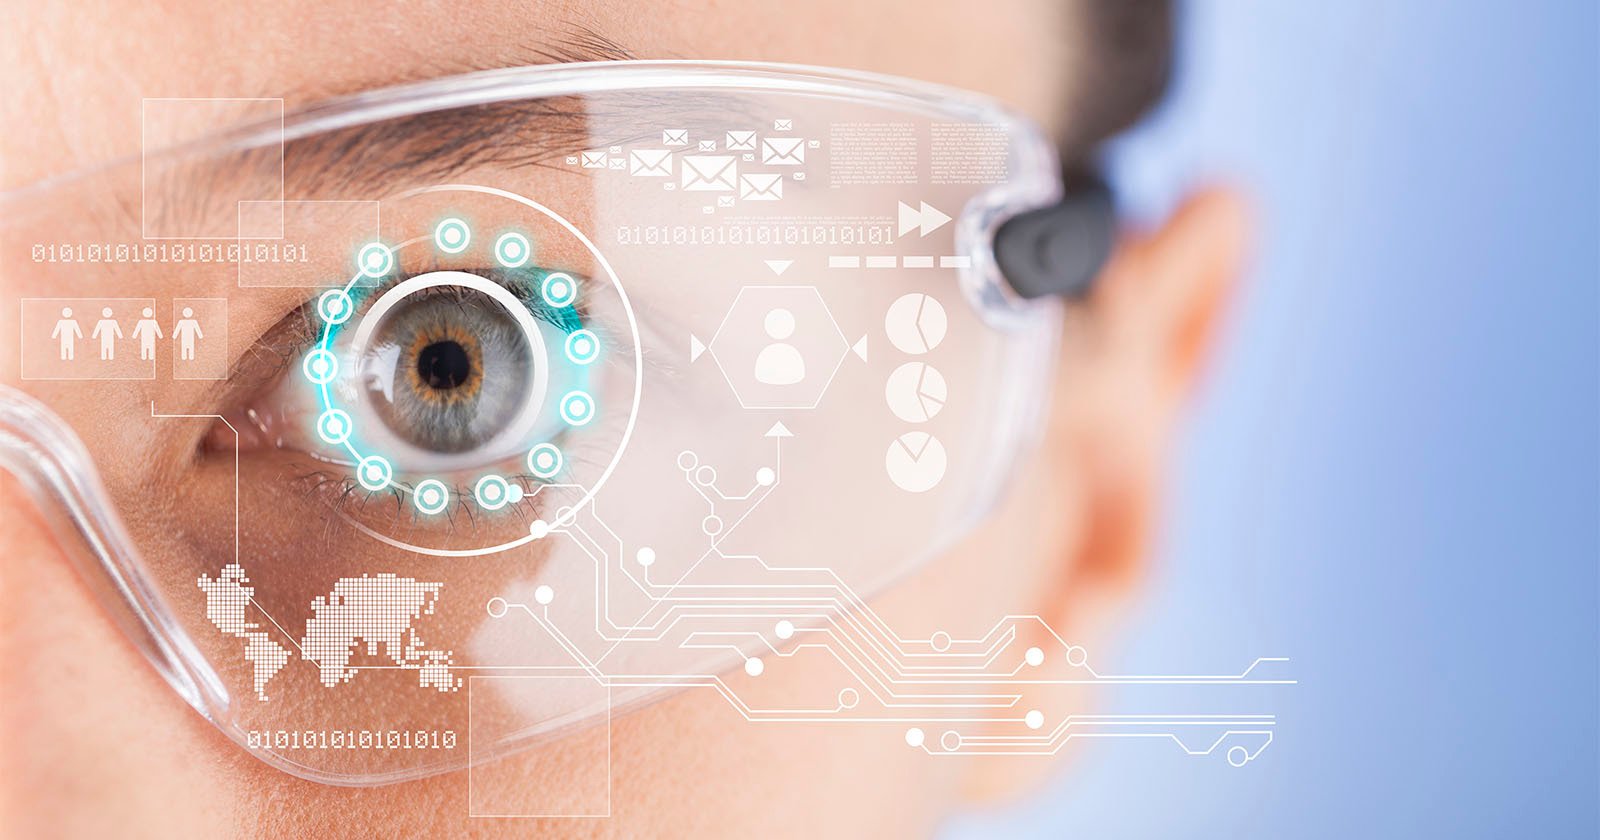  camera tech aims revolutionize eye tracking 